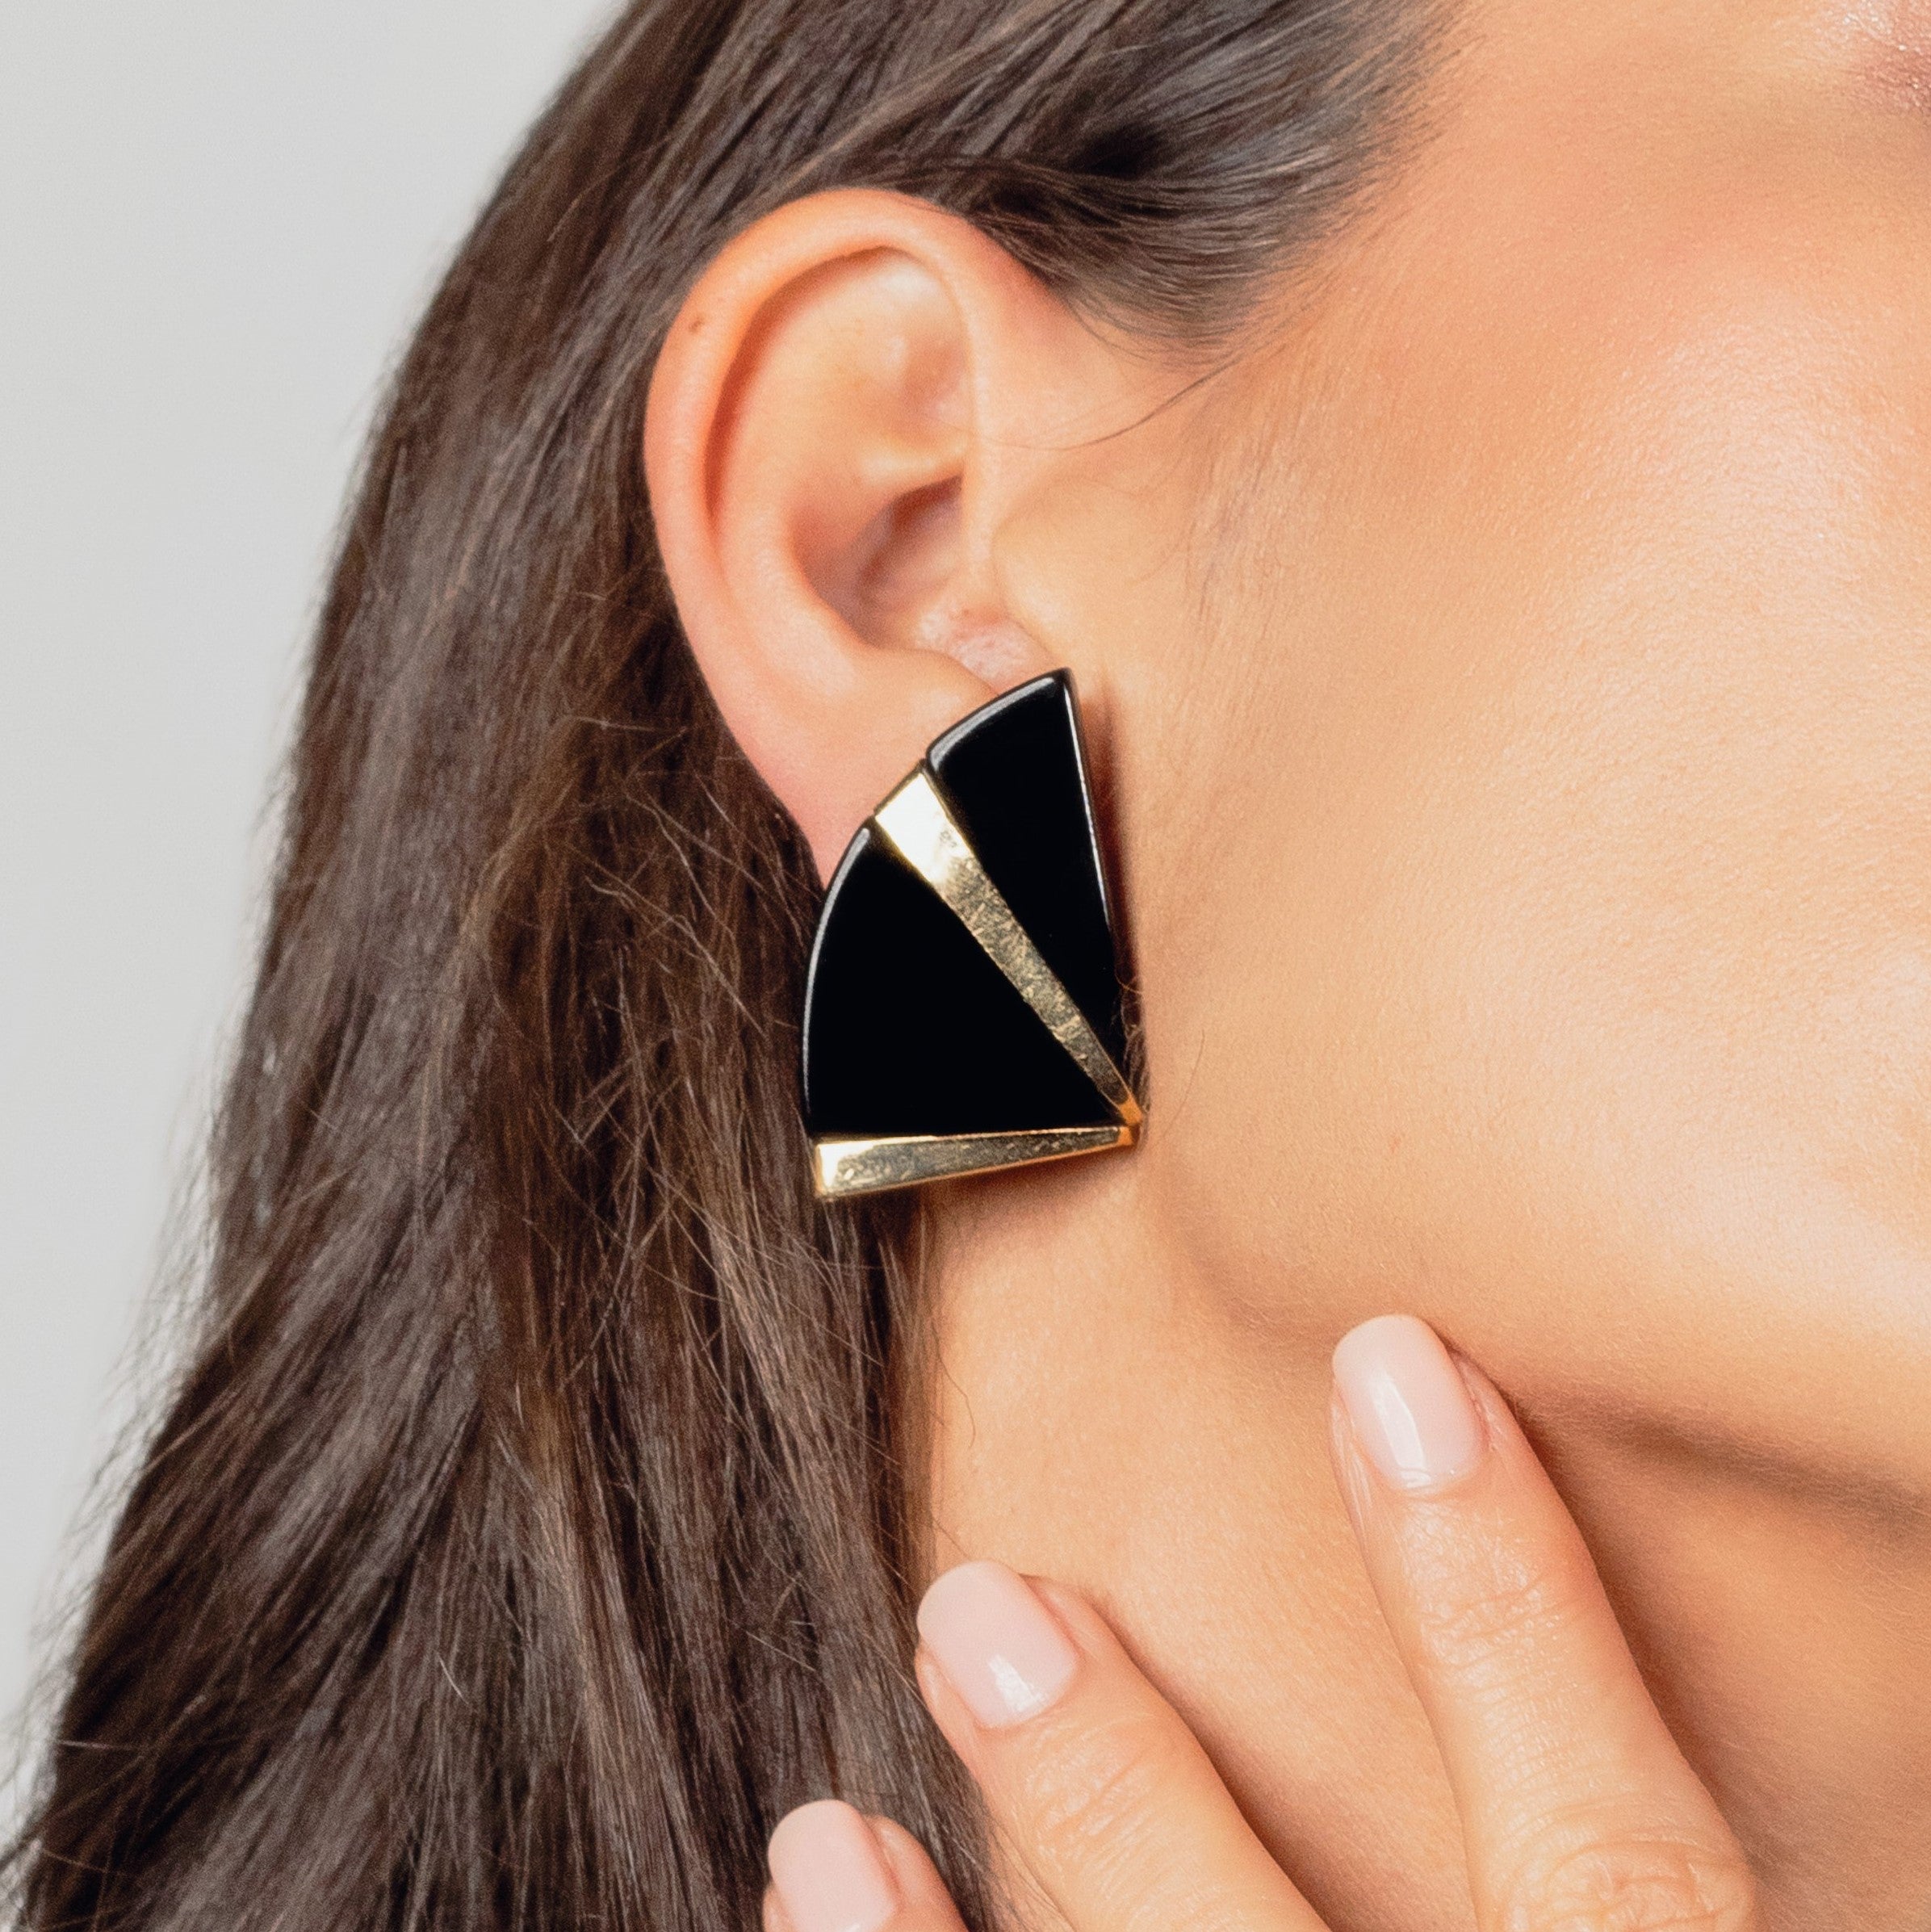 Triangular geometric earrings worn on a woman’s ear.